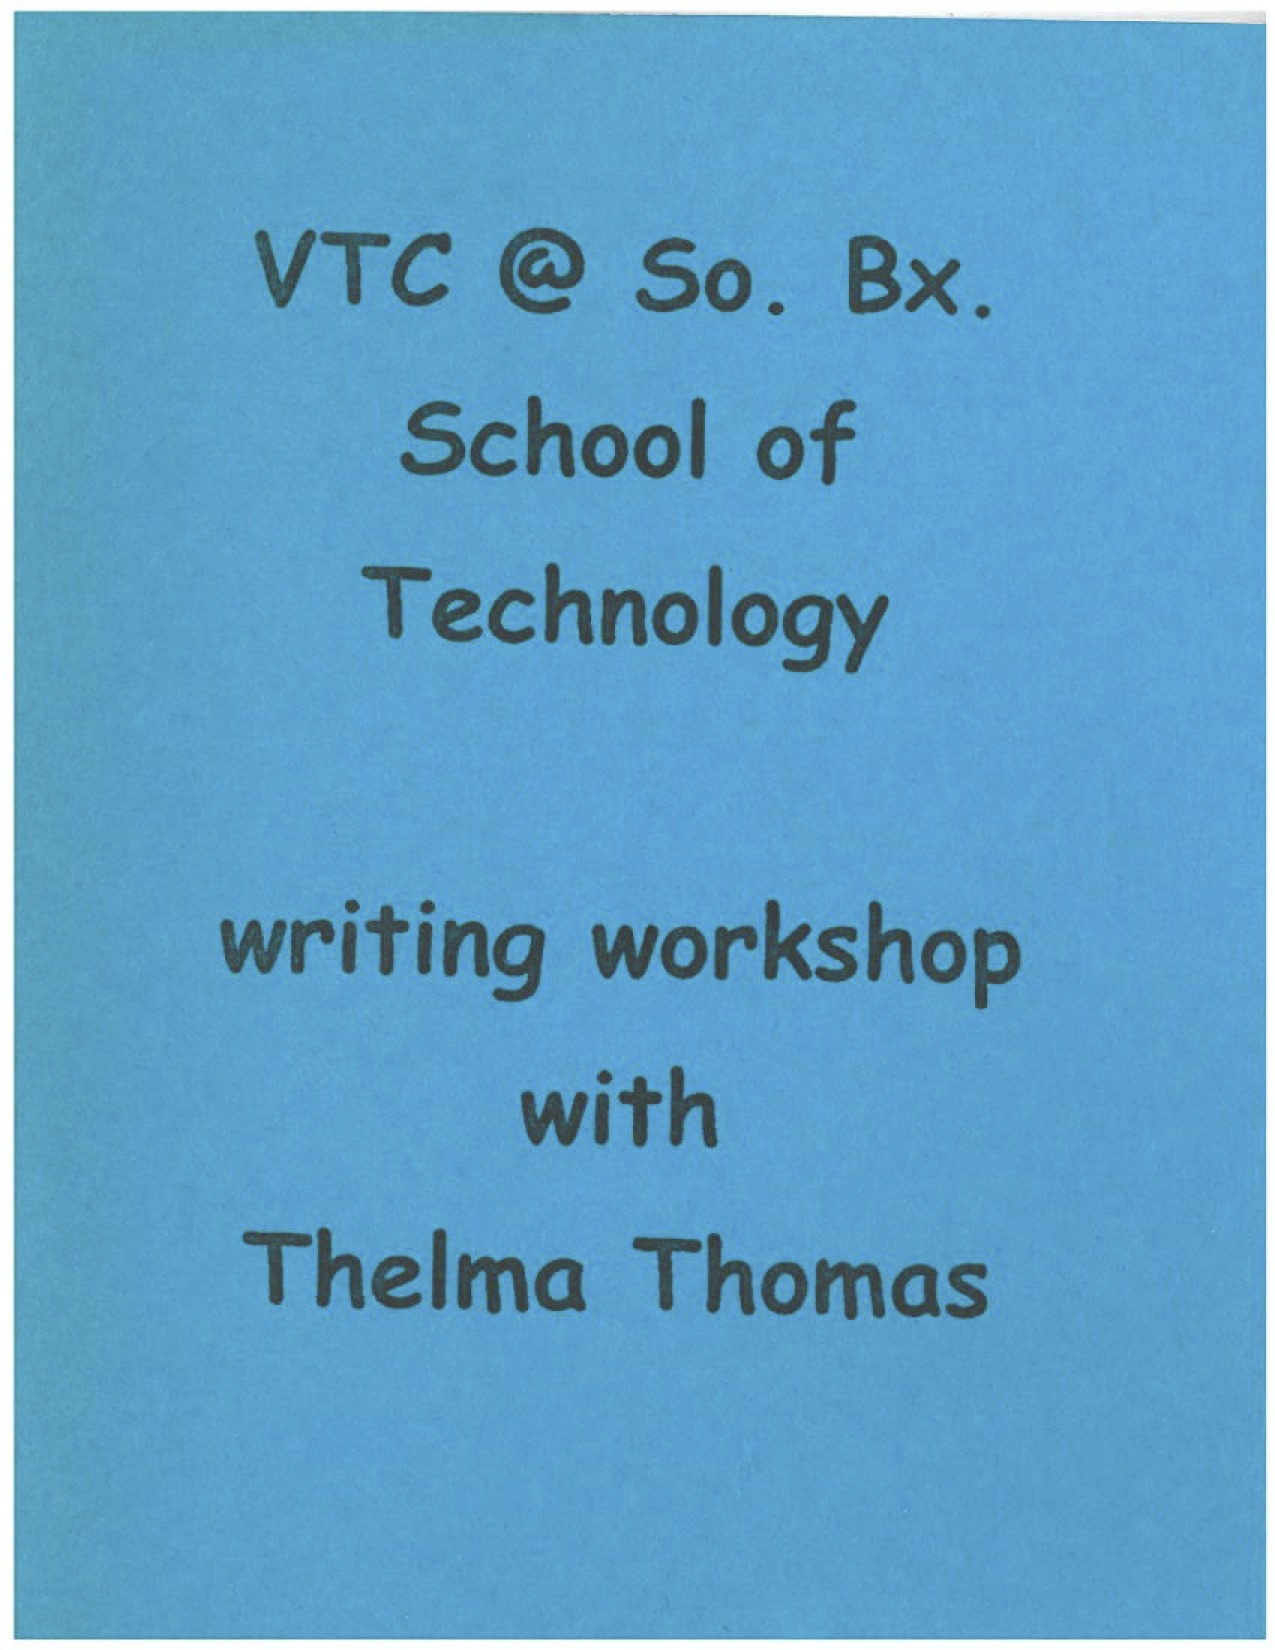 VTC writing workshop with Thelma Thomas